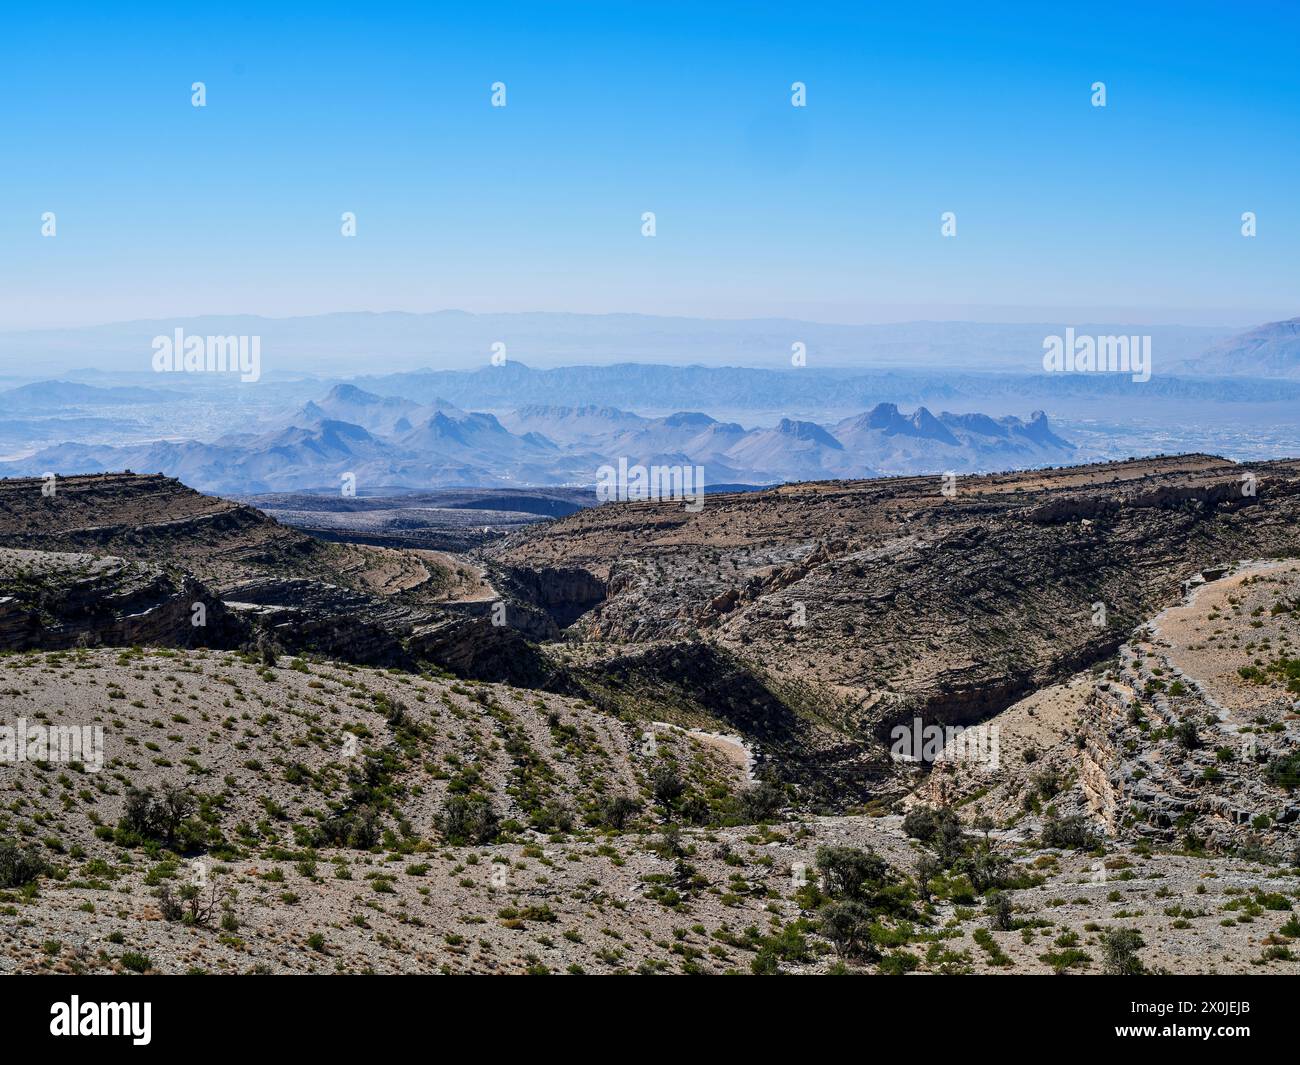 Oman, Hajar Mountains, Blick von der Spitze des Passes am Wadi Bani AWF über die Hajar Mountains, Stockfoto